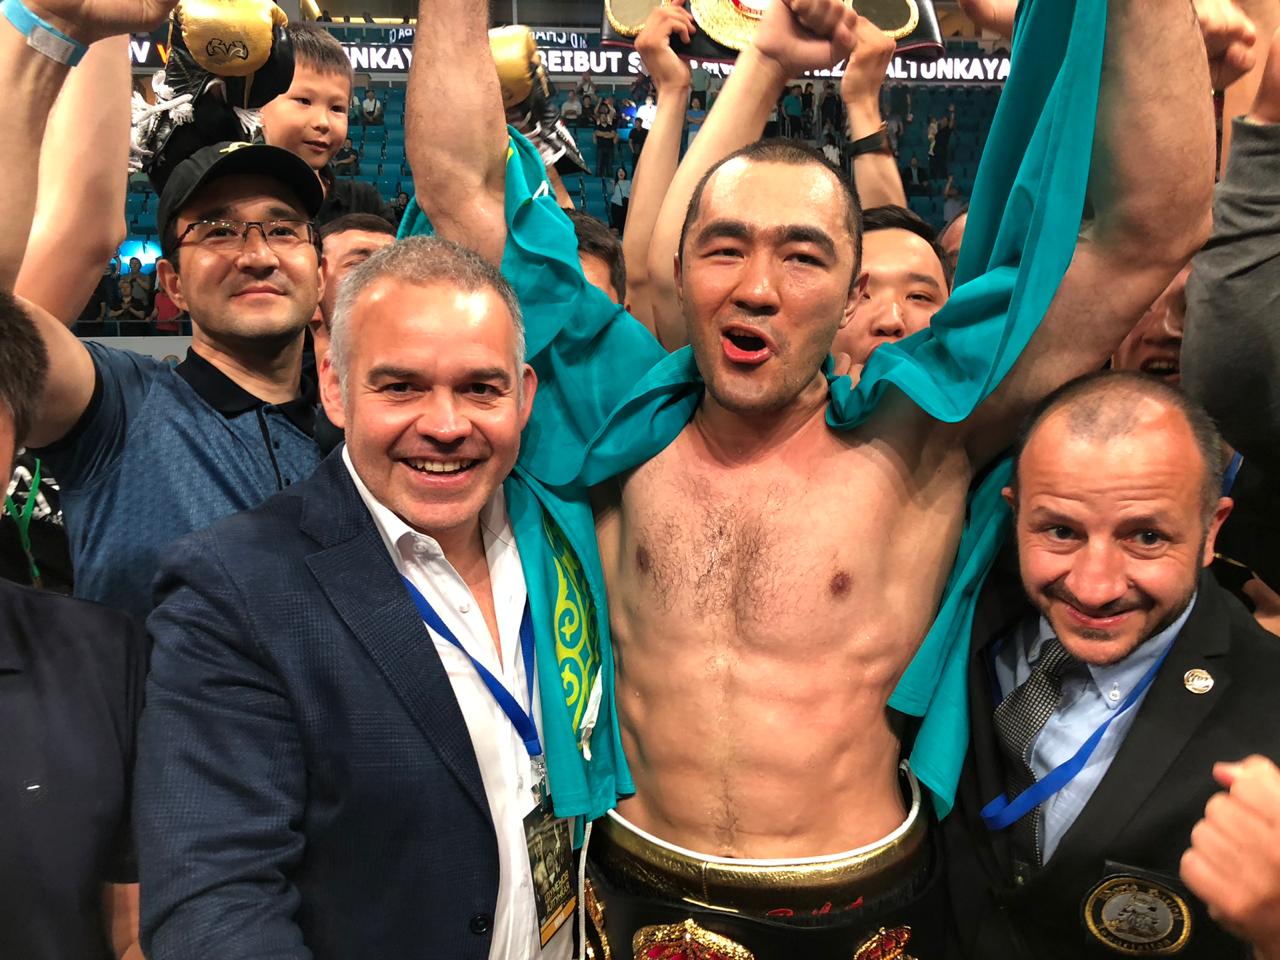 Beibut Shumenov defeated Hizni Altunkaya by TKO9